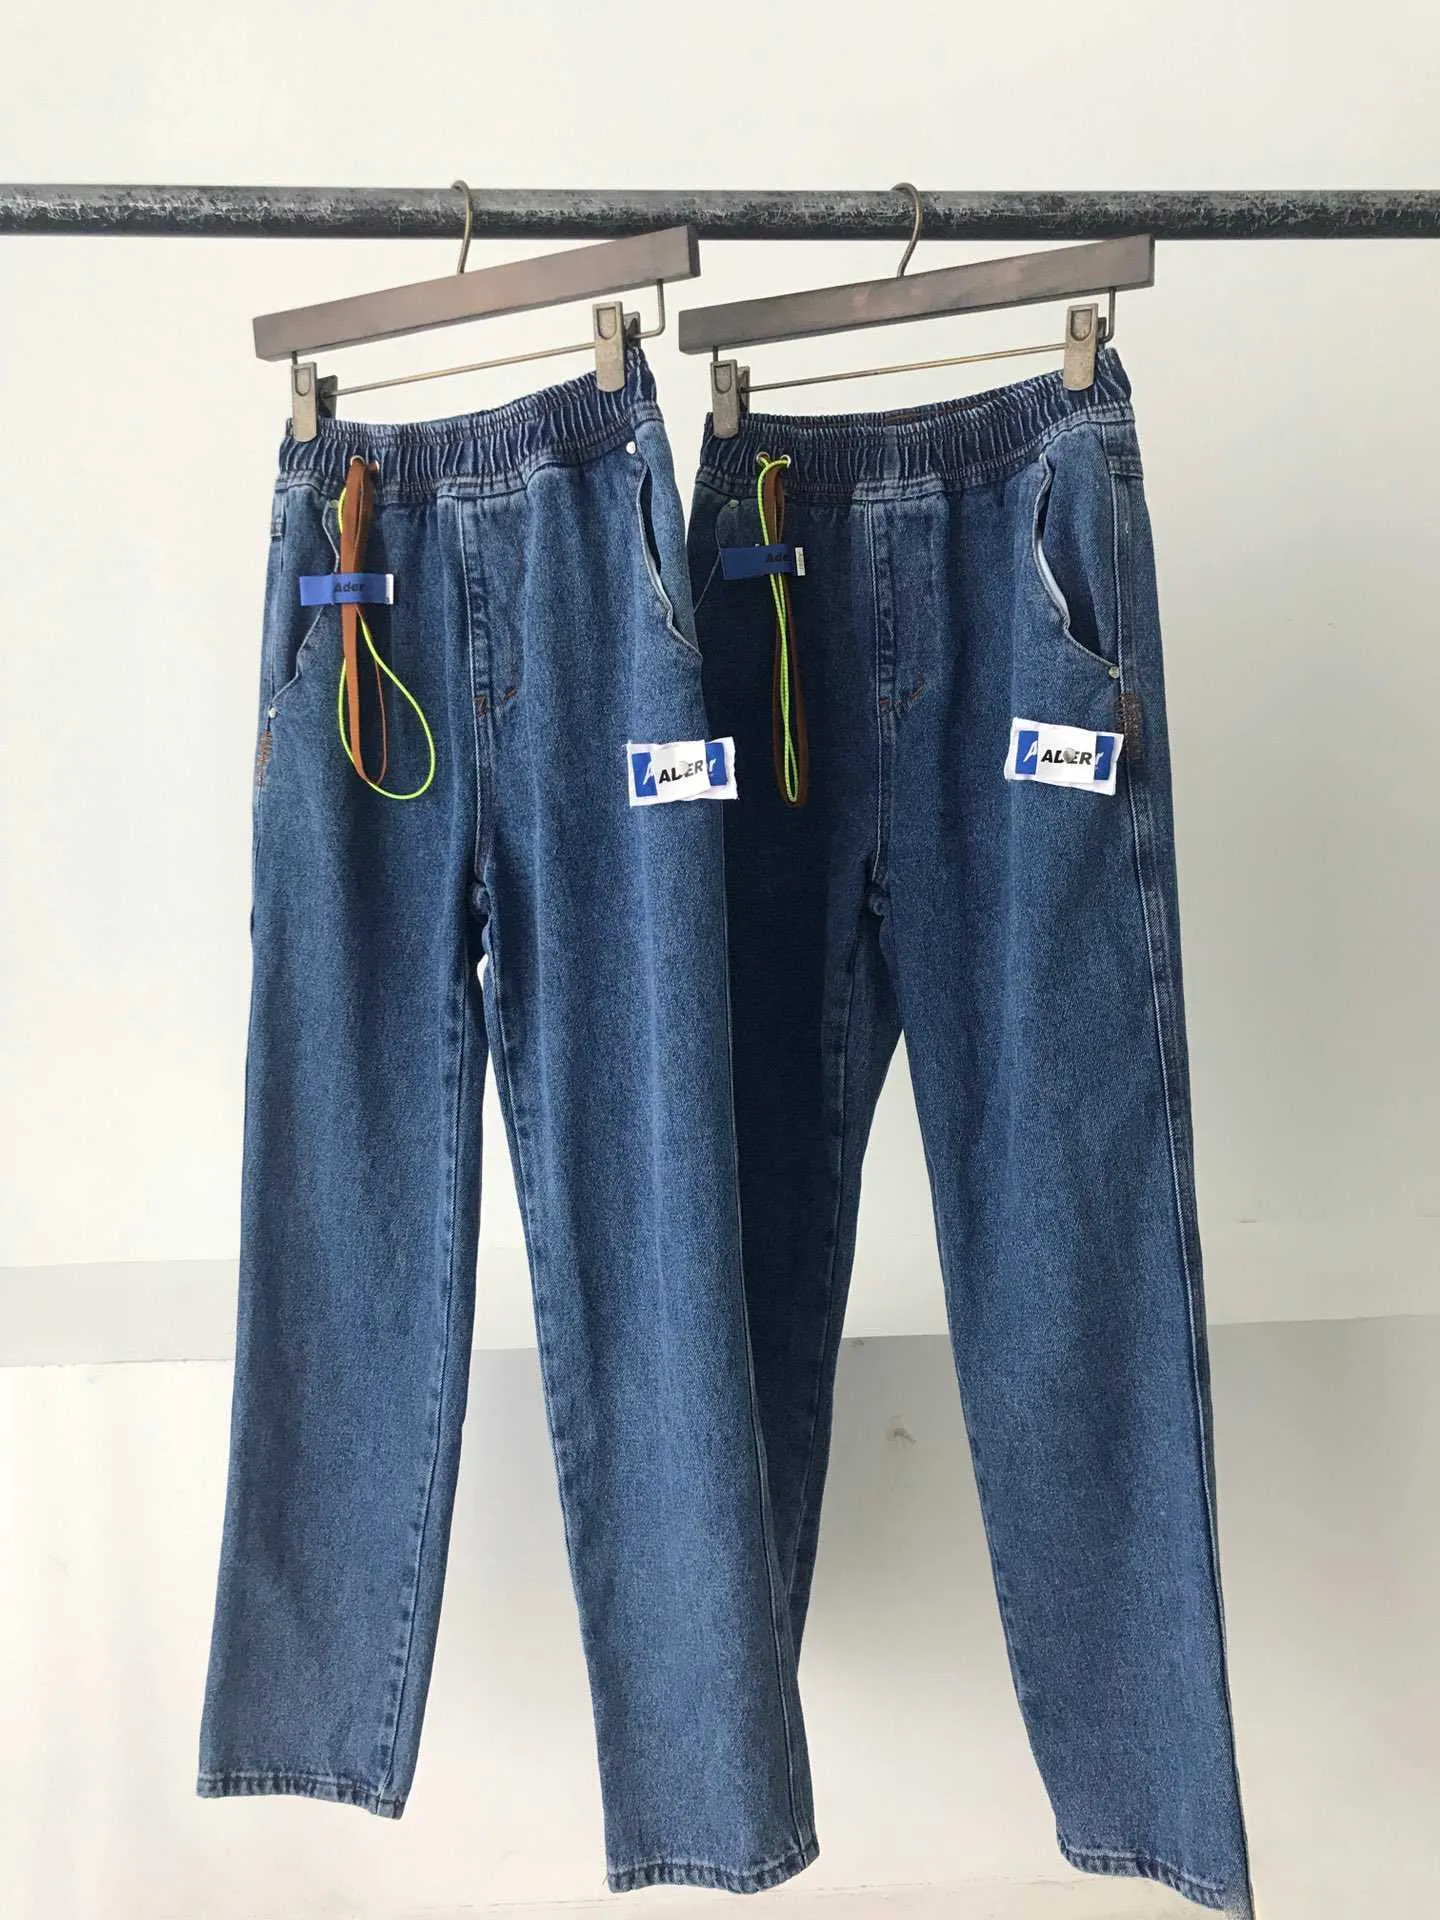 Adererror Irregular Pocket Faded Denim Pants Men Women Couple Elastic Waistli Jeans Oversized Hip-hop High Street ADER Jeans X0602